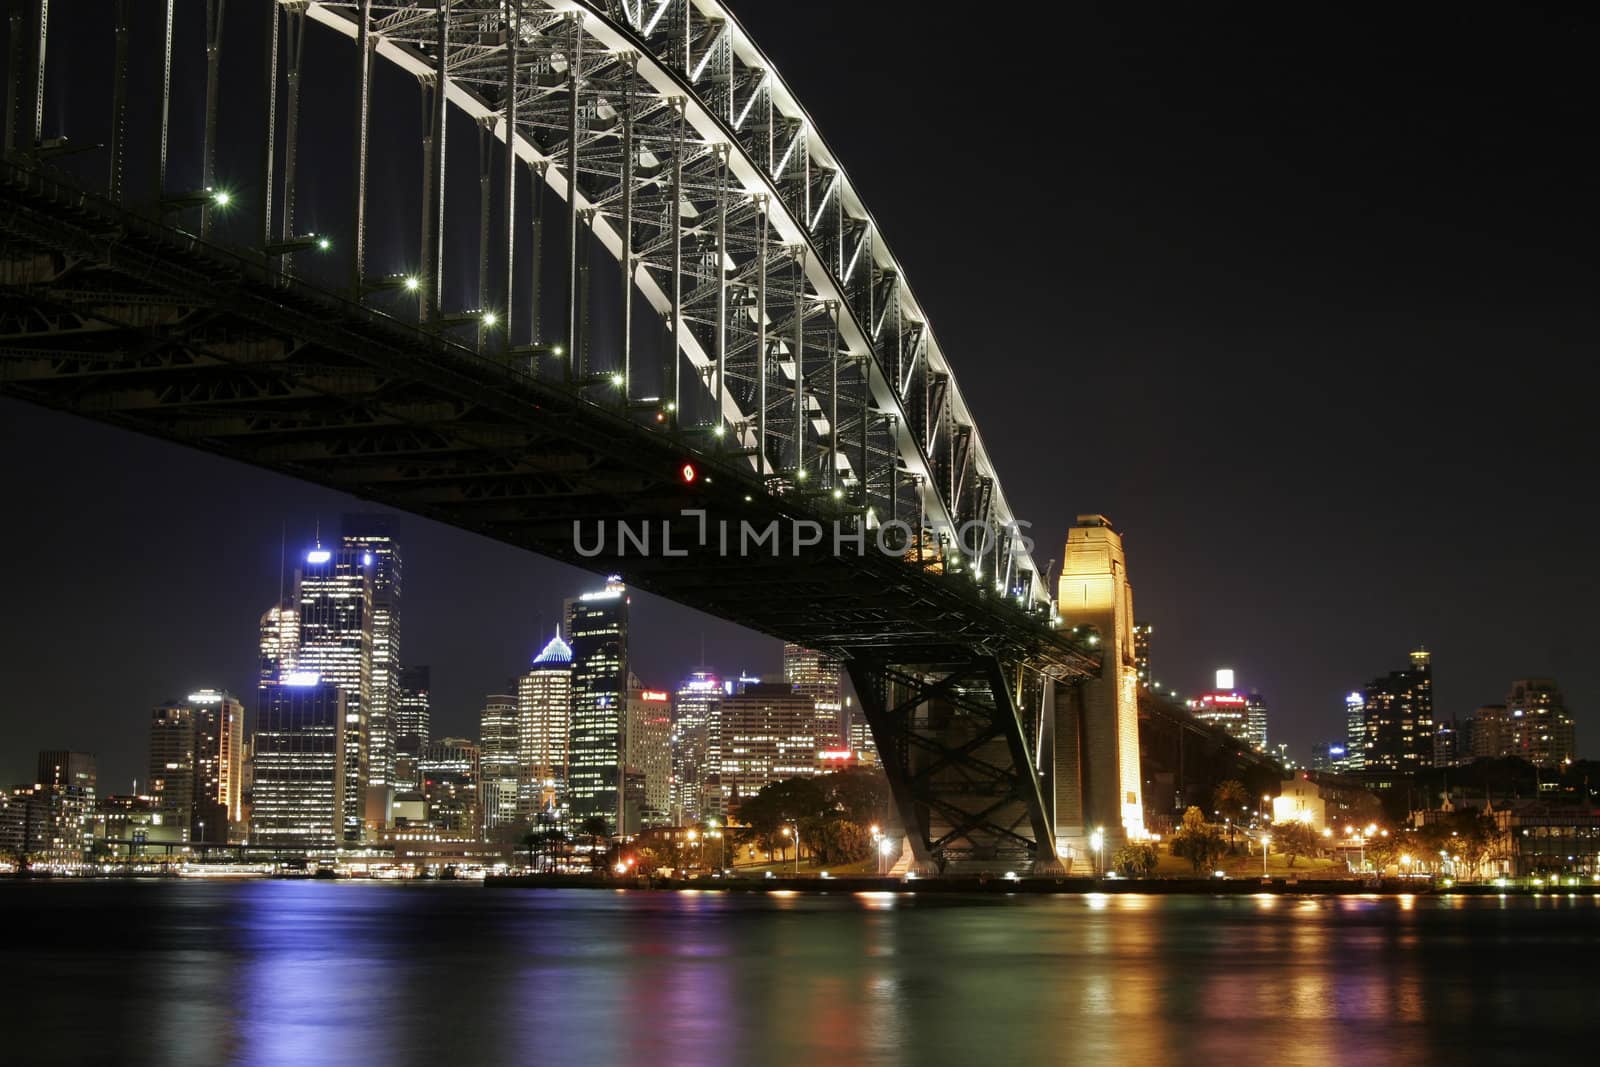 Sydney Harbour Bridge At Night by thorsten